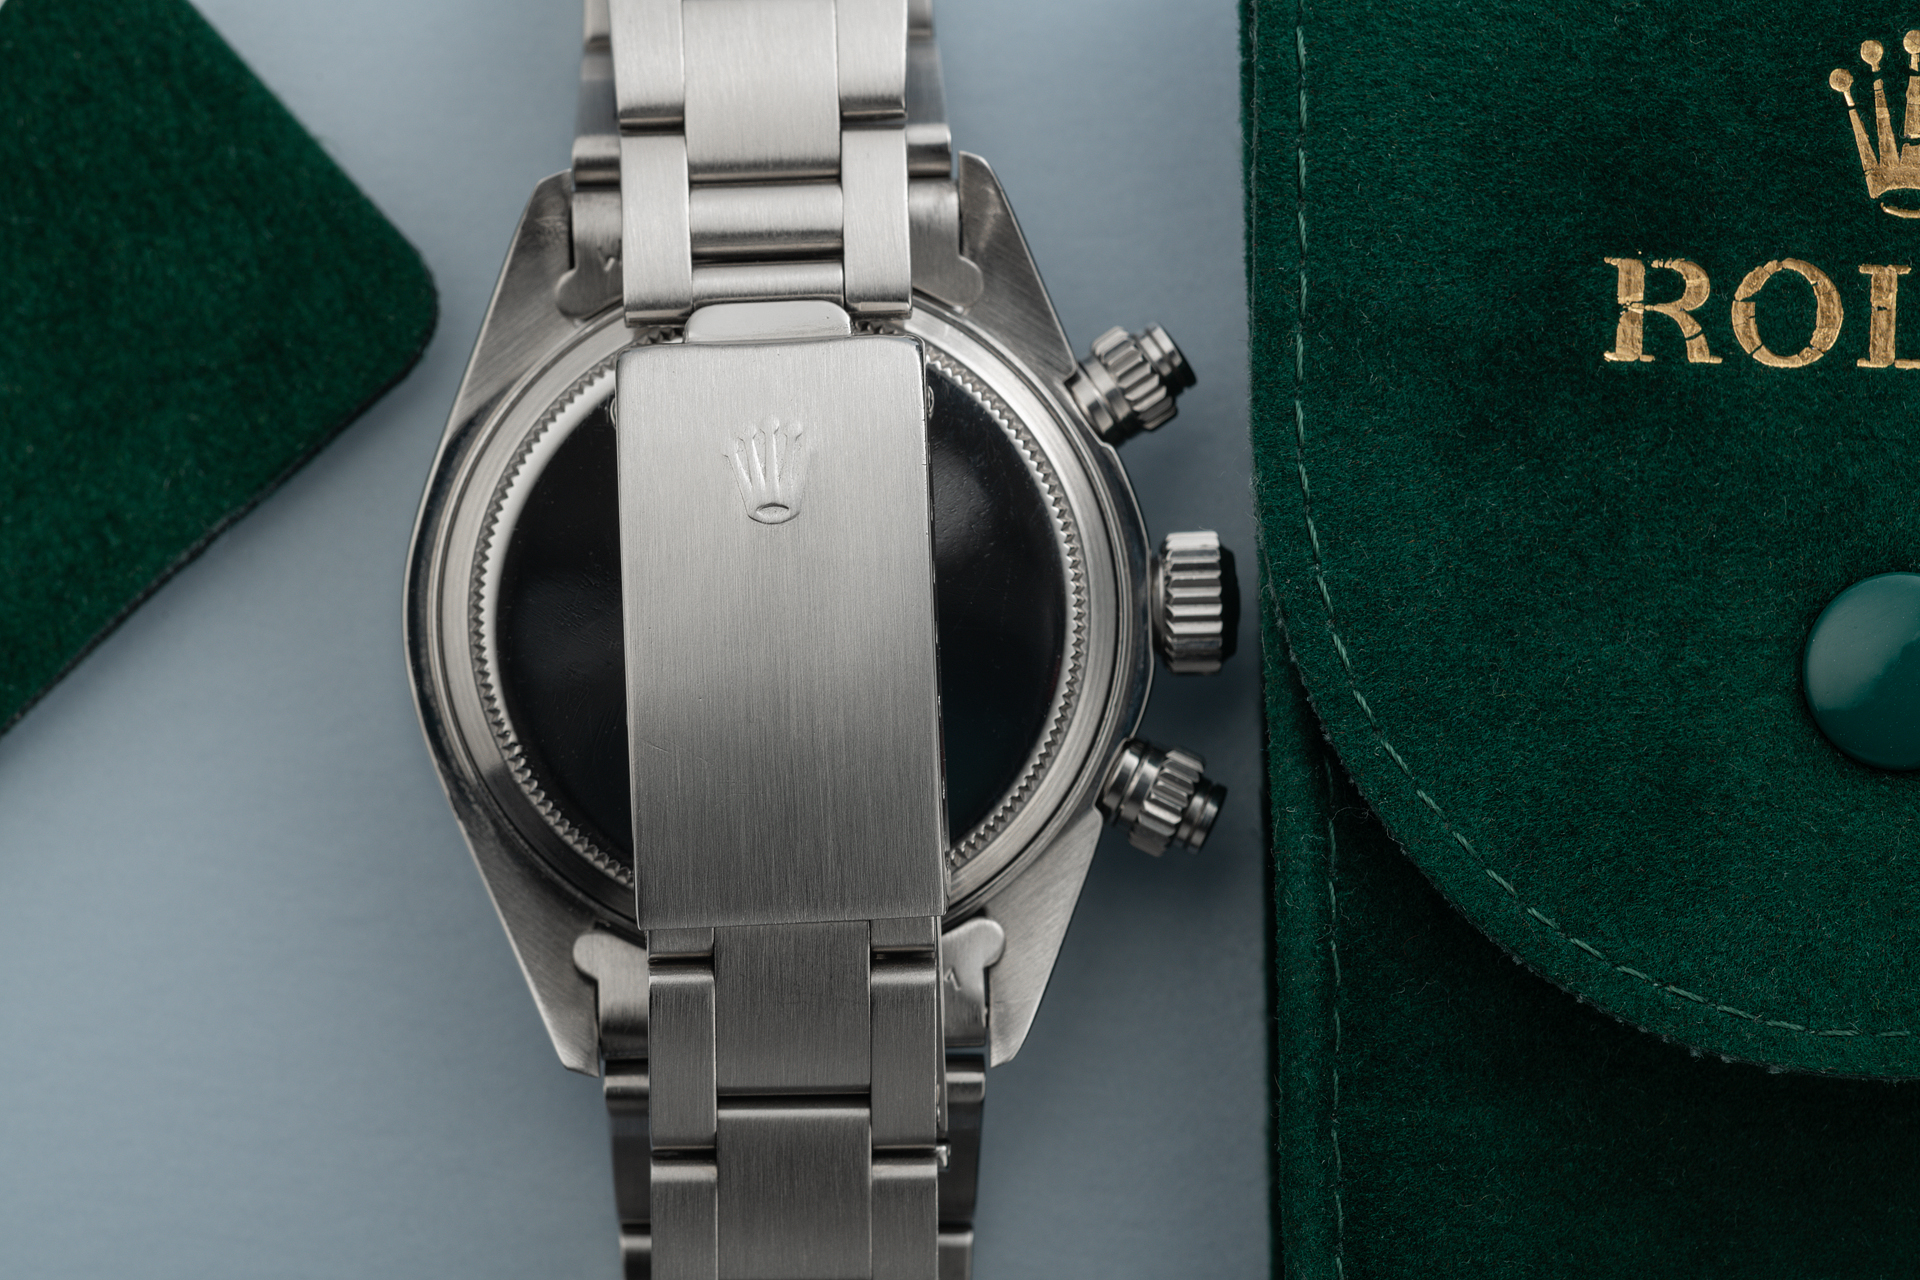 Rolex Cosmograph Daytona Watches | ref 6265 | 'Panda Dial' Vintage ...